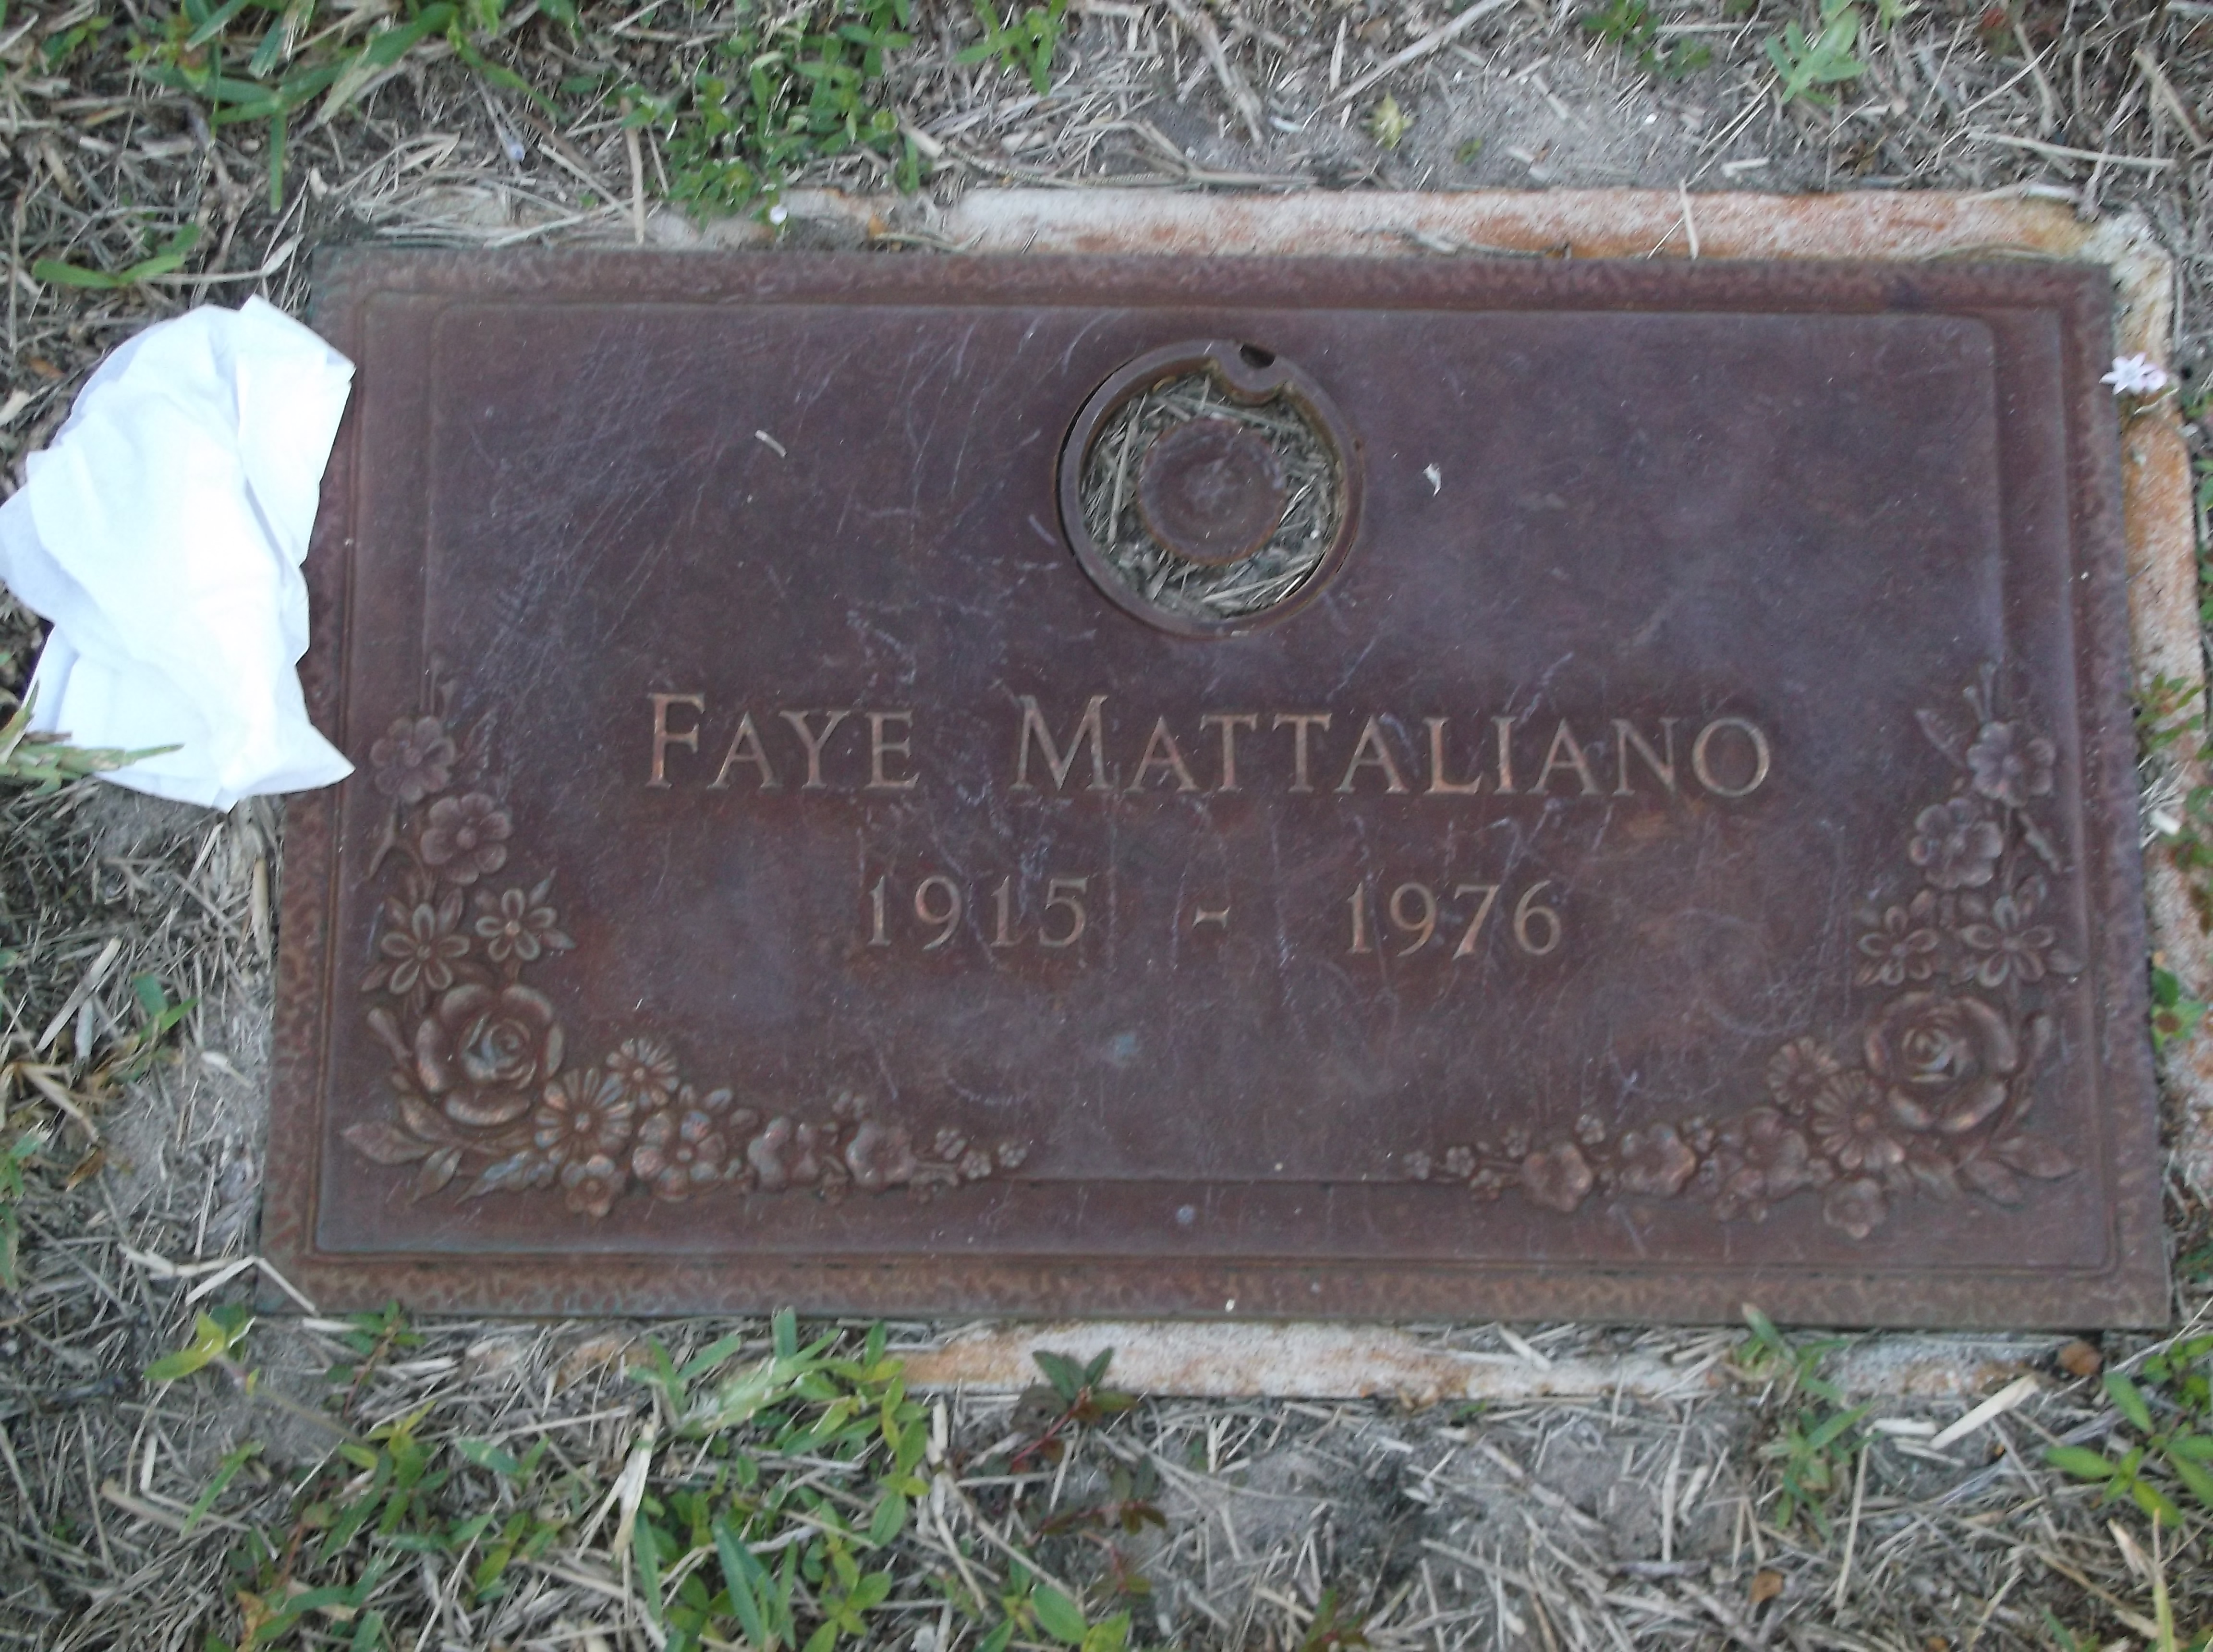 Faye Mattaliano